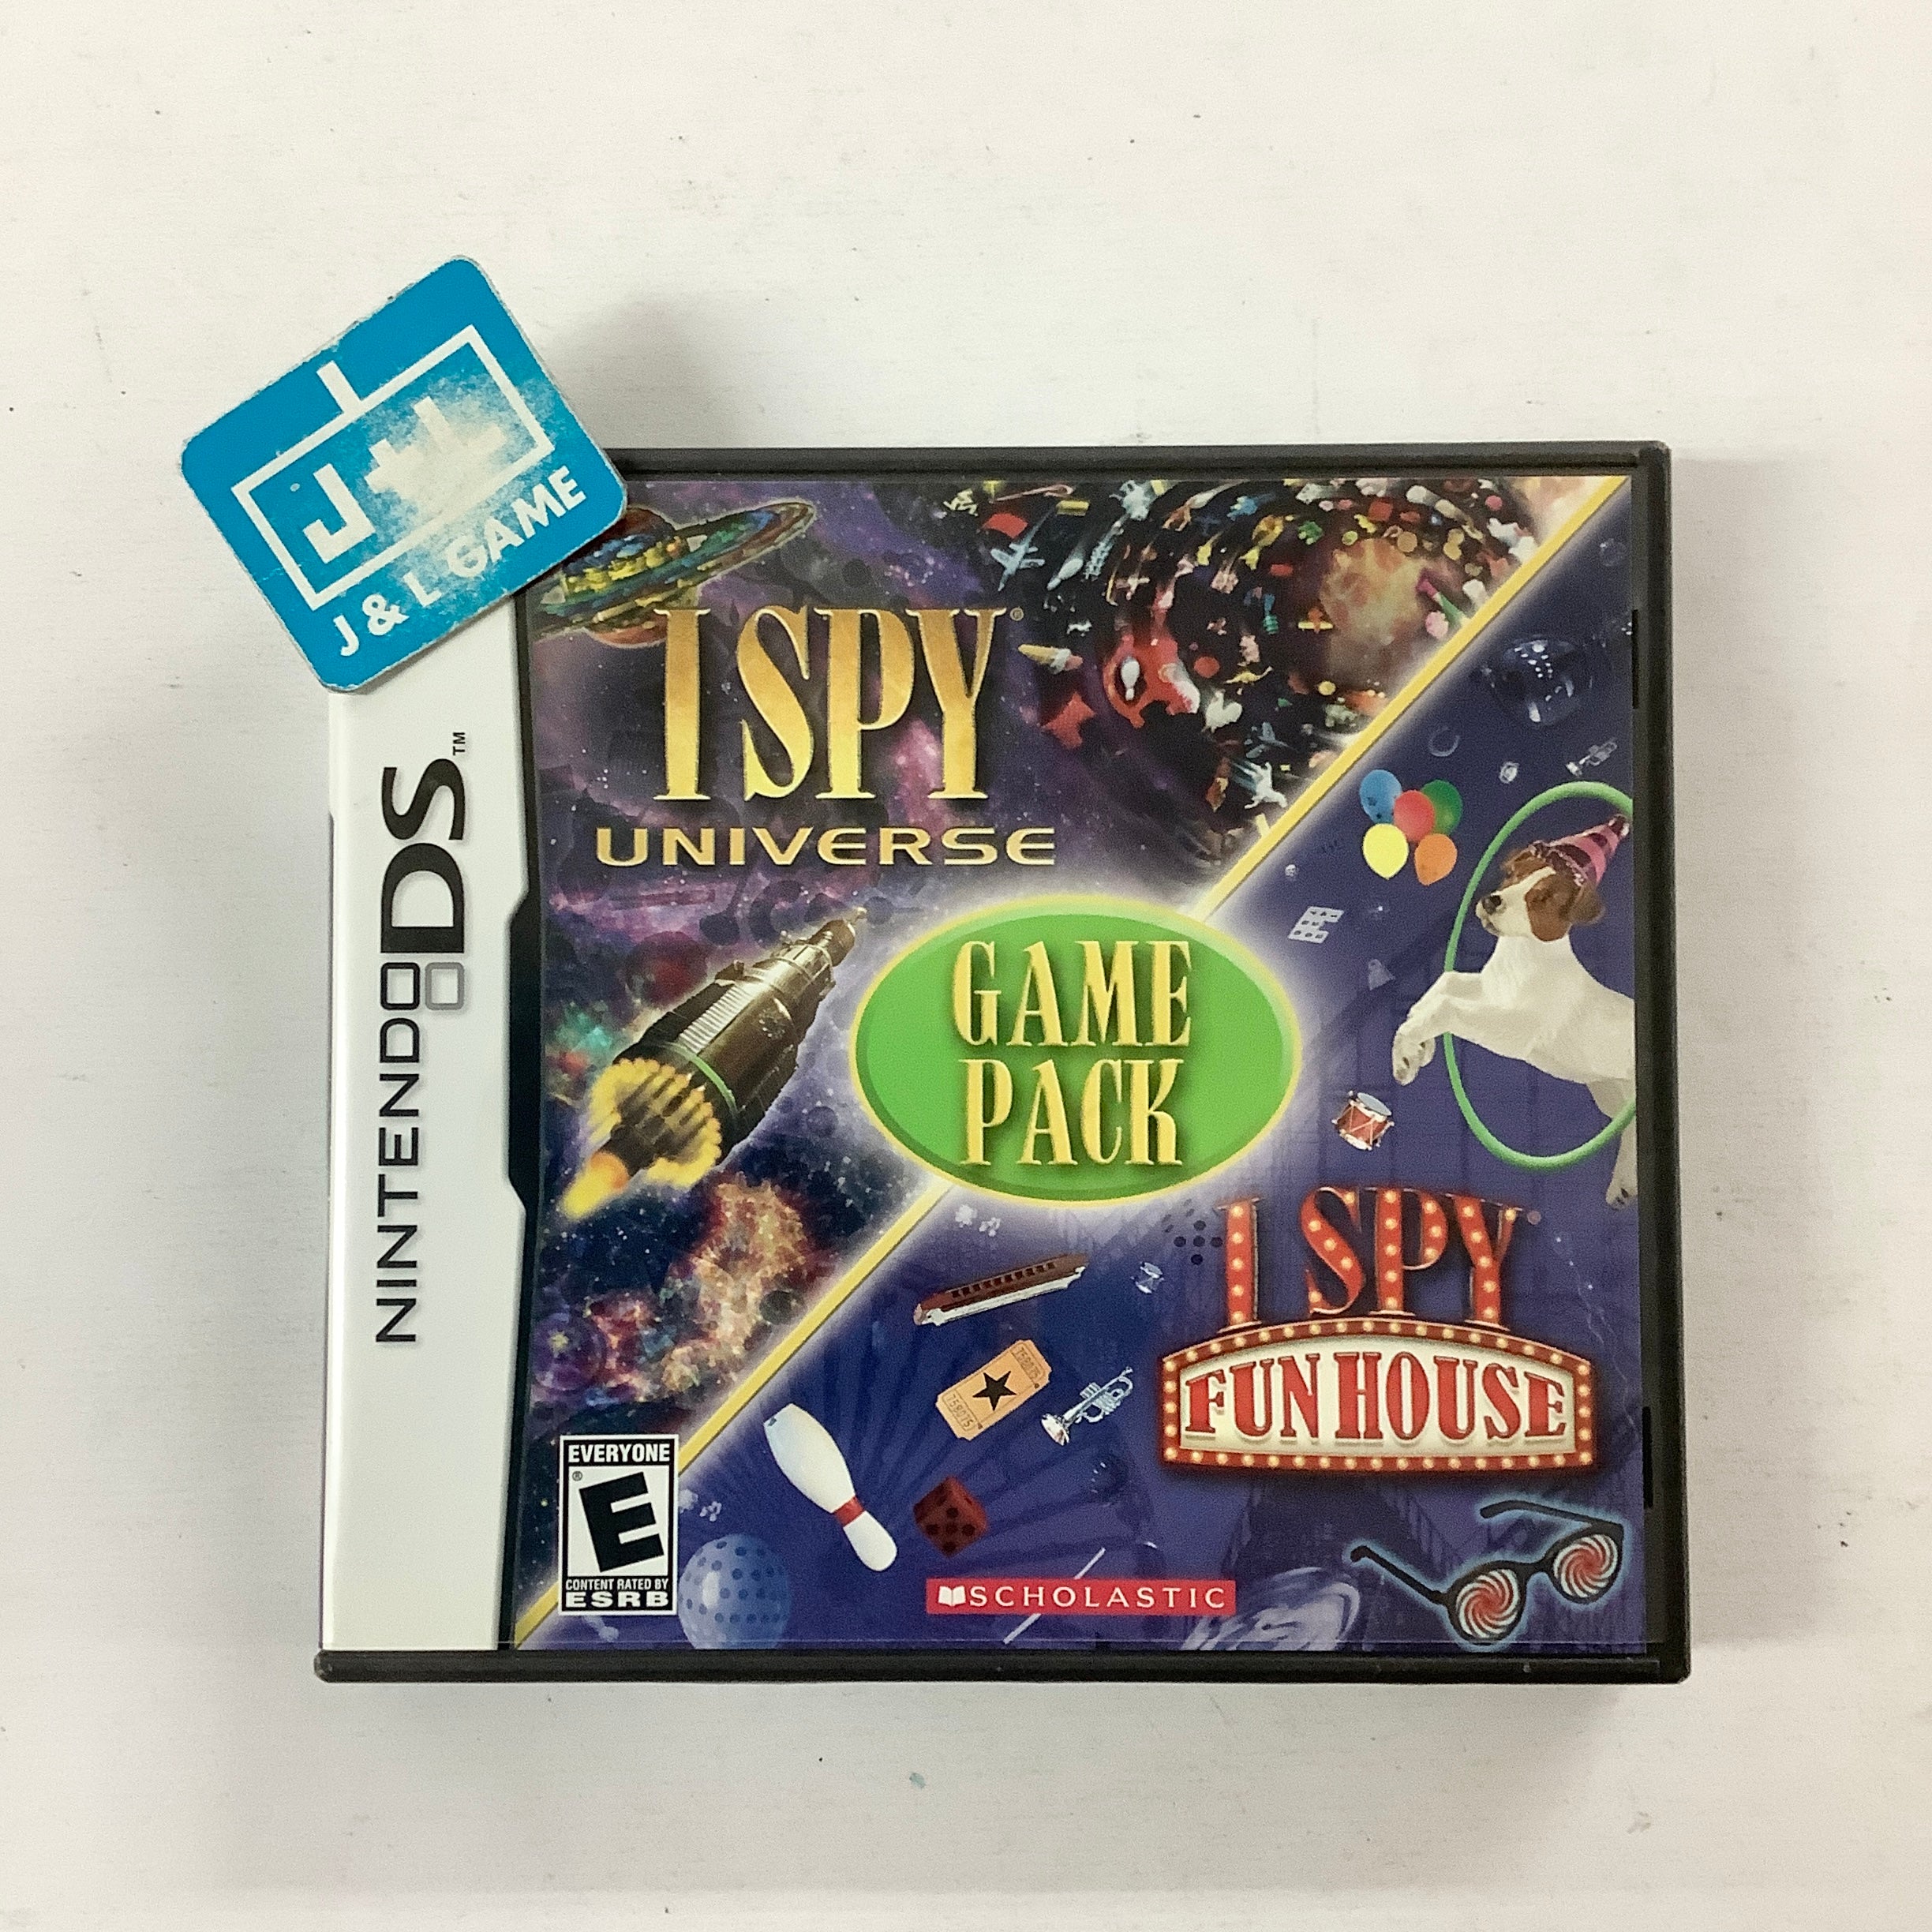 I Spy: Game Pack - I Spy Universe / I Spy Fun House - (NDS) Nintendo DS [Pre-Owned]